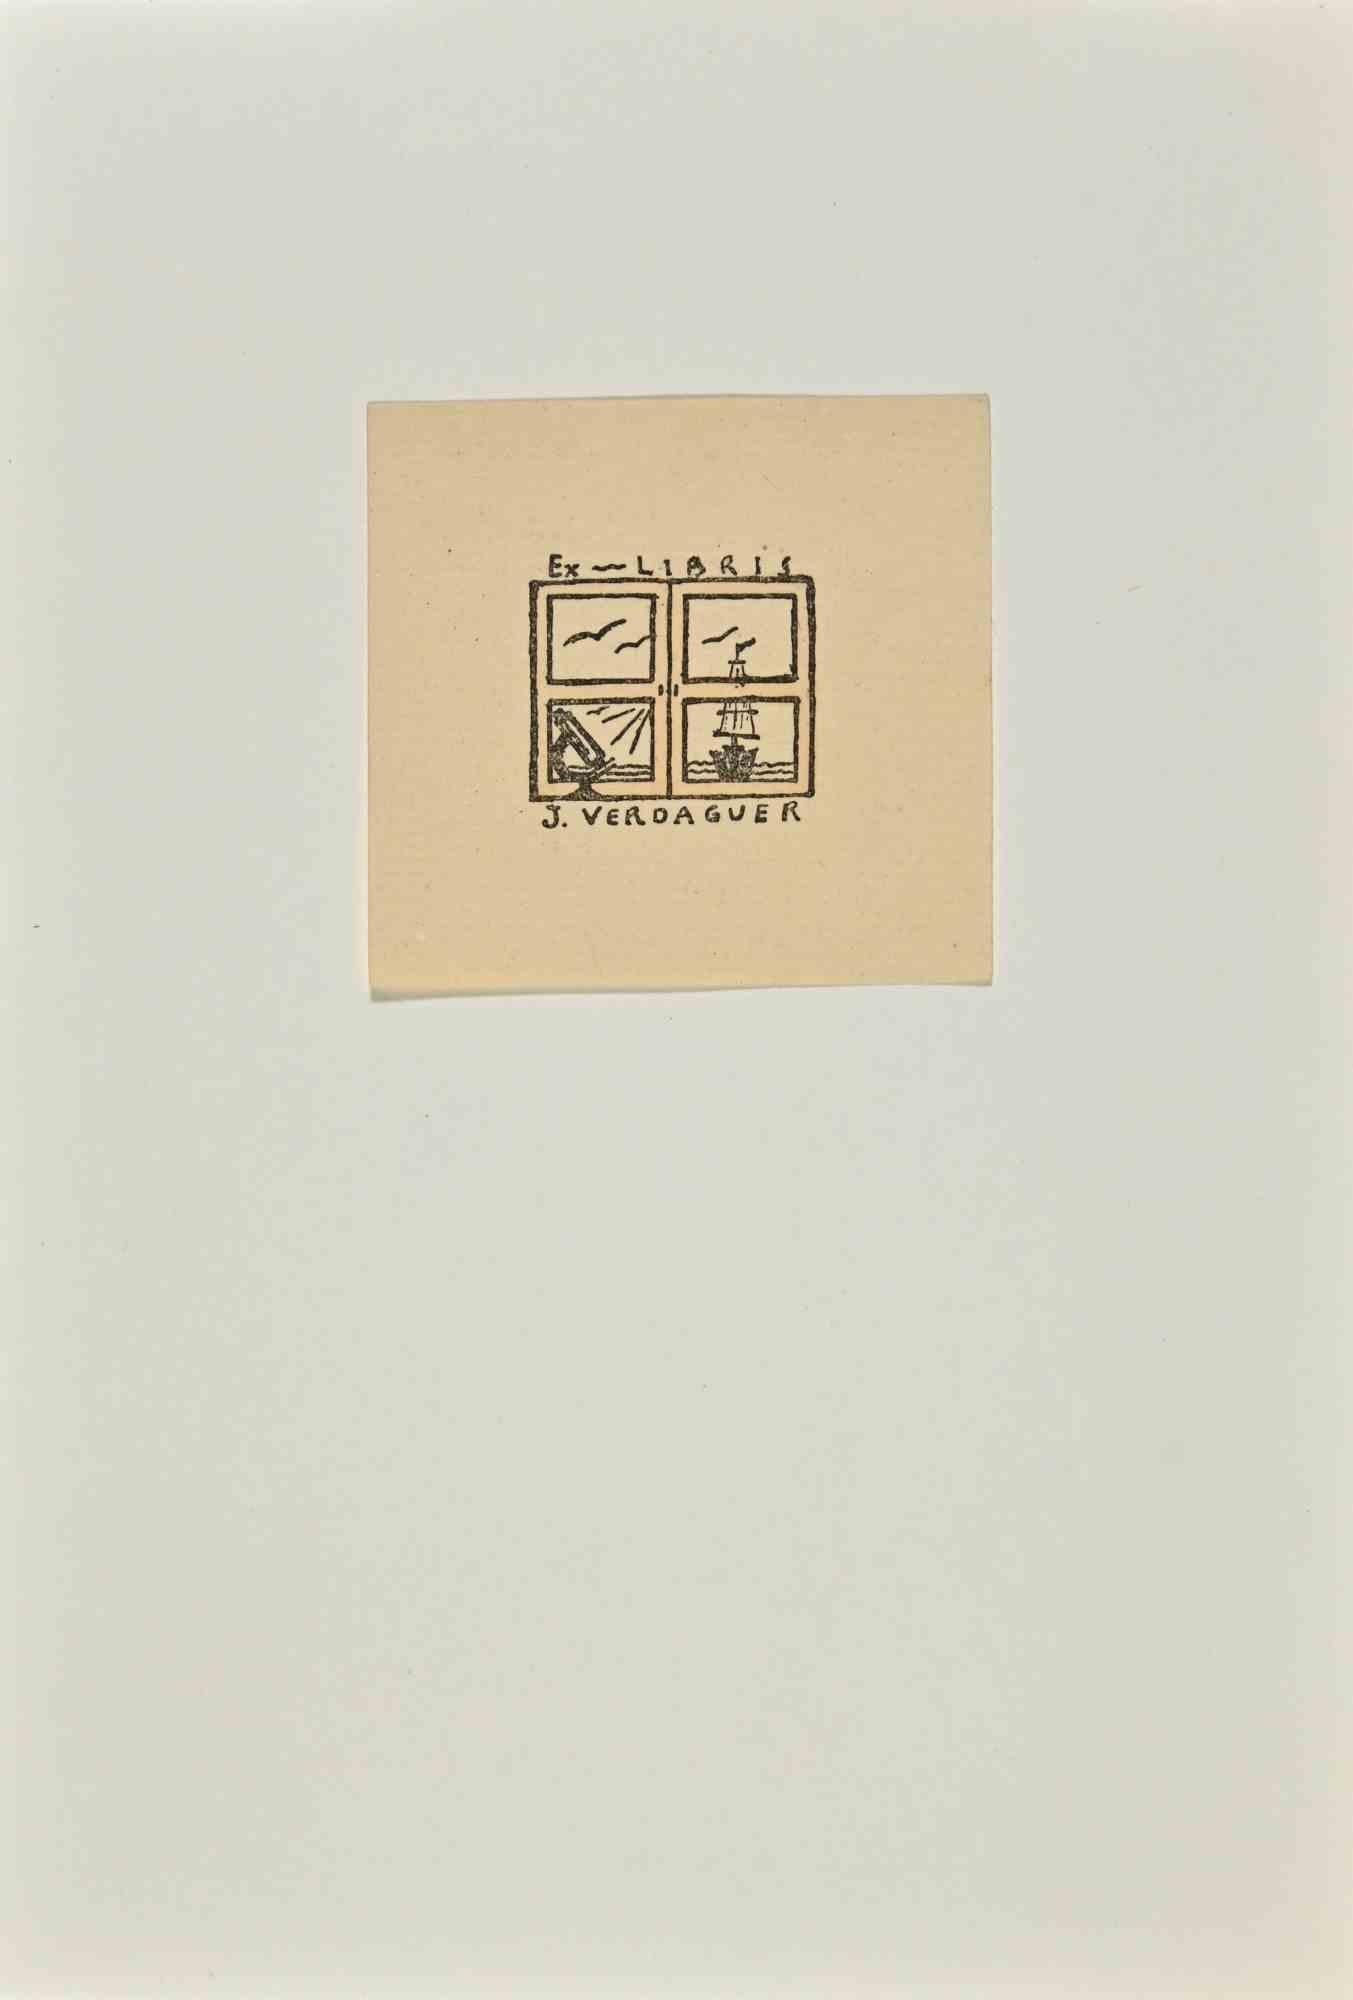 Unknown Figurative Print - Ex Libris J. Veroaguer - Woodcut Print - Mid-20th Century